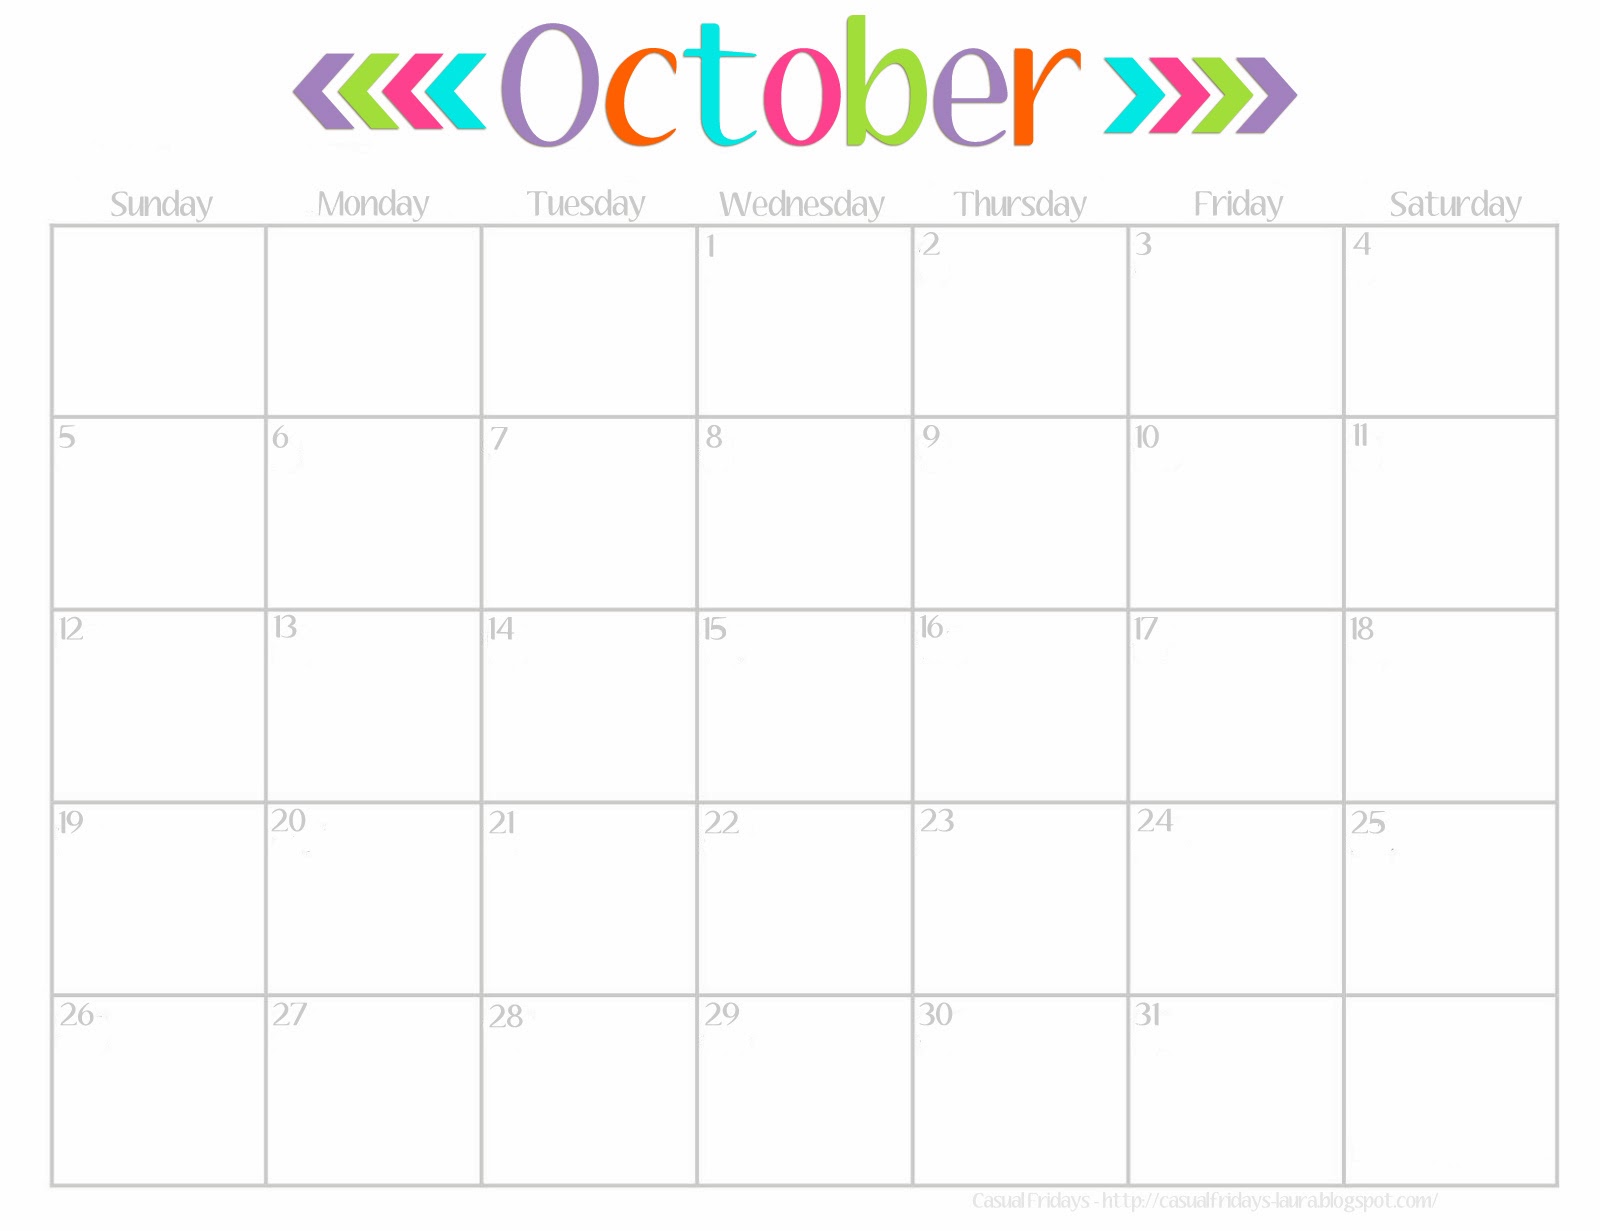 7-best-images-of-cute-free-printable-calendar-october-2015-cute-october-2014-calendar